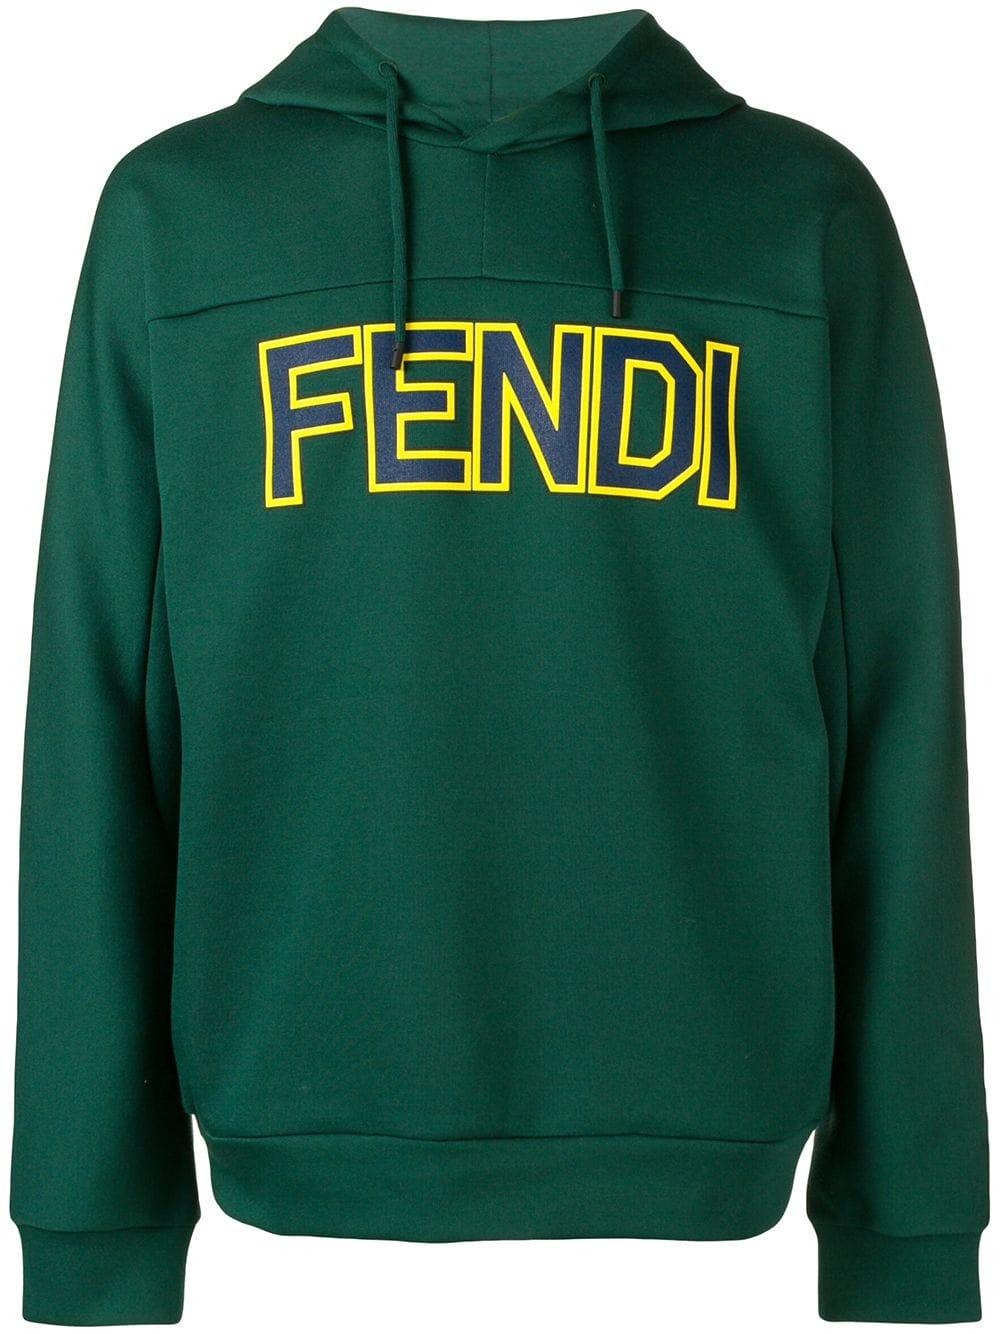 Fendi Cotton Logo Print Hoodie in Green for Men - Save 46% - Lyst